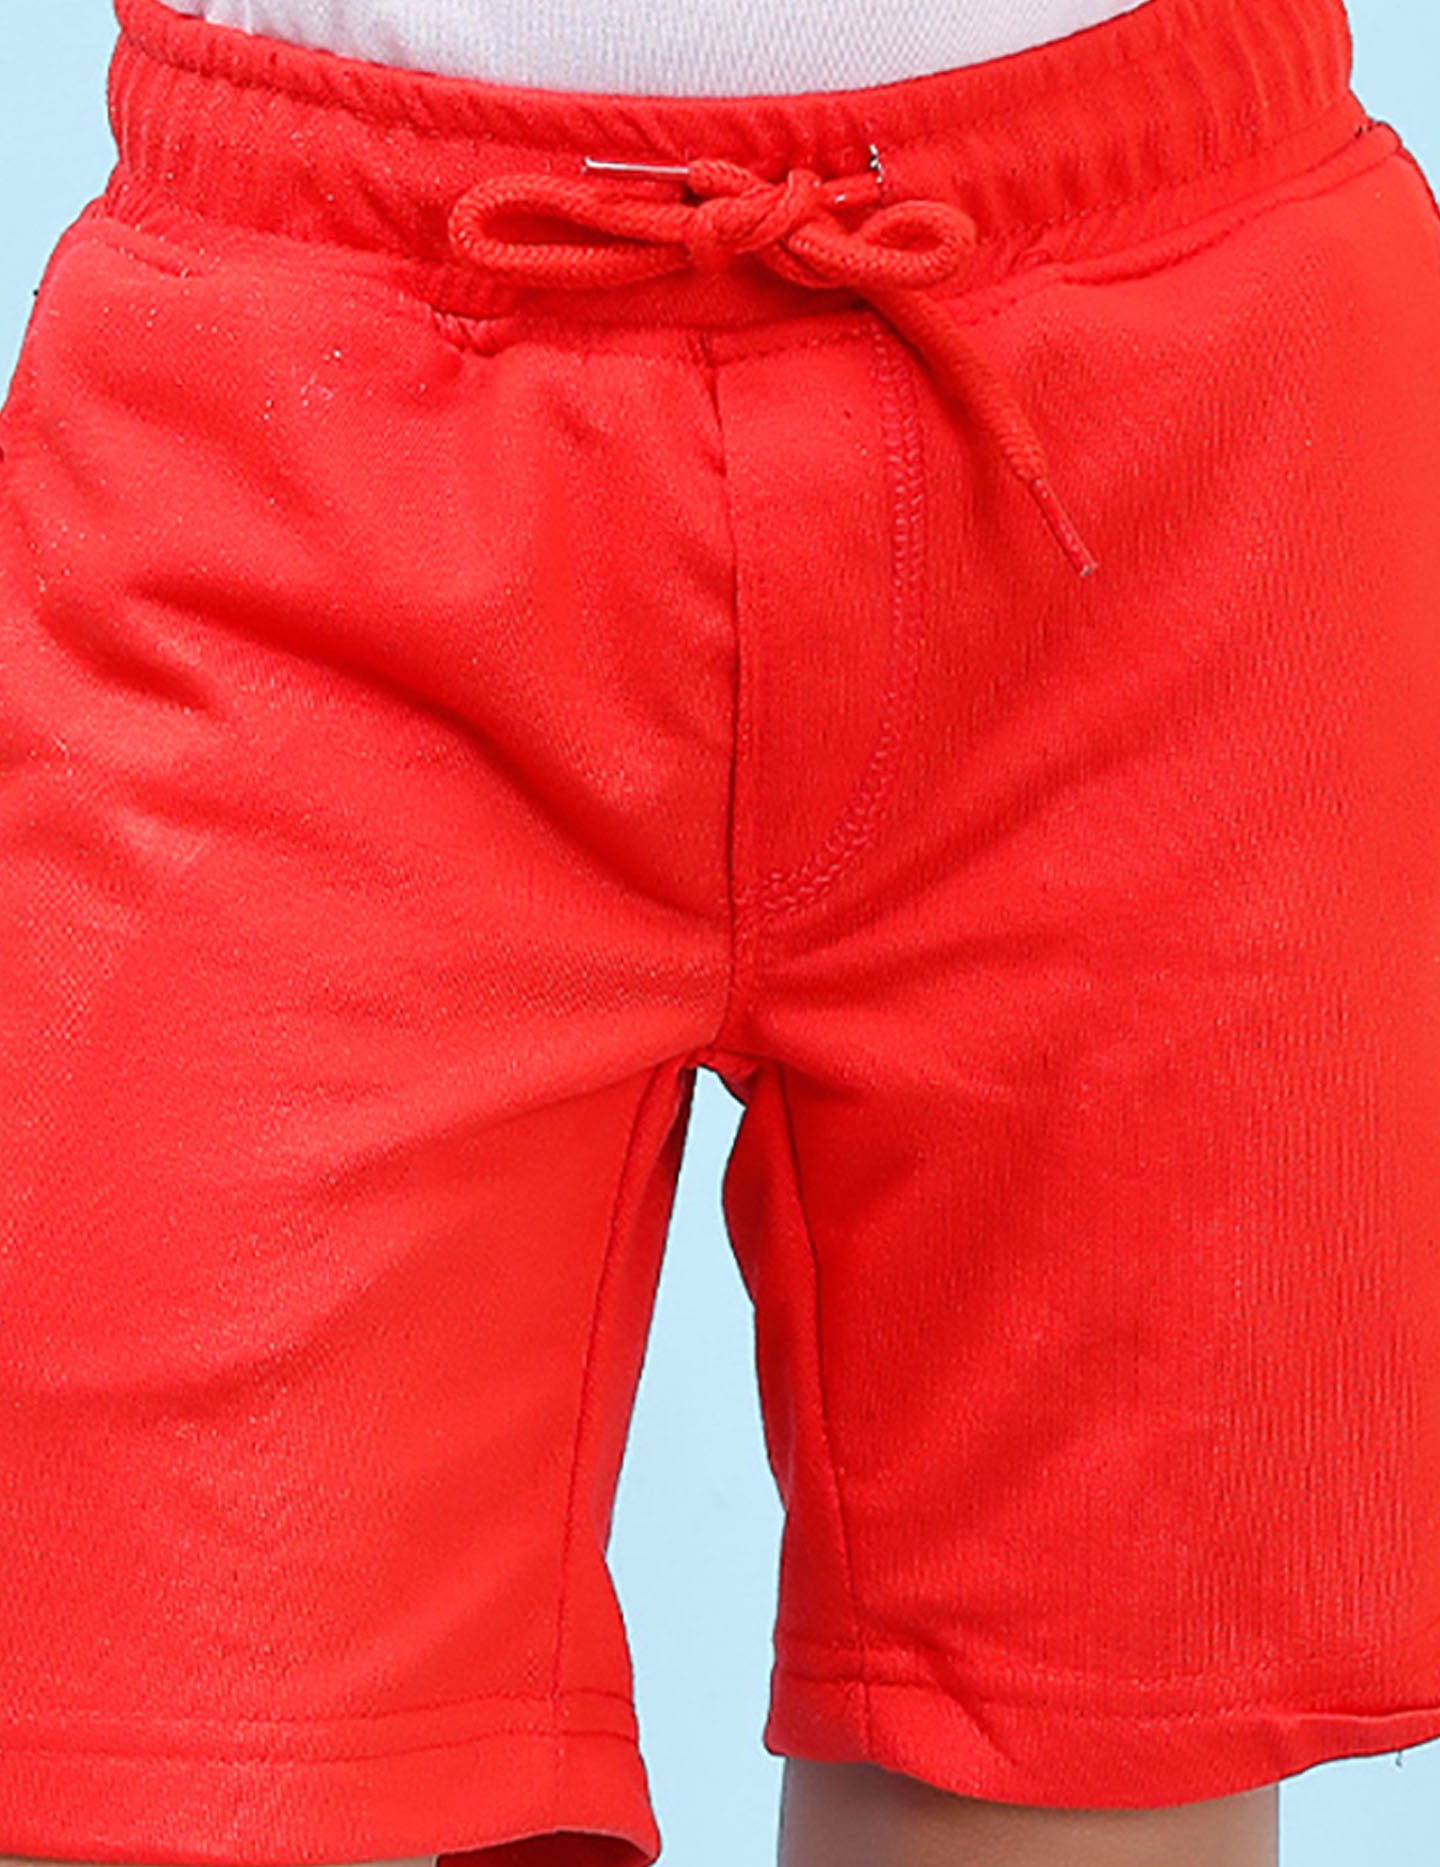 Nusyl Changer Printed Red Boys Shorts